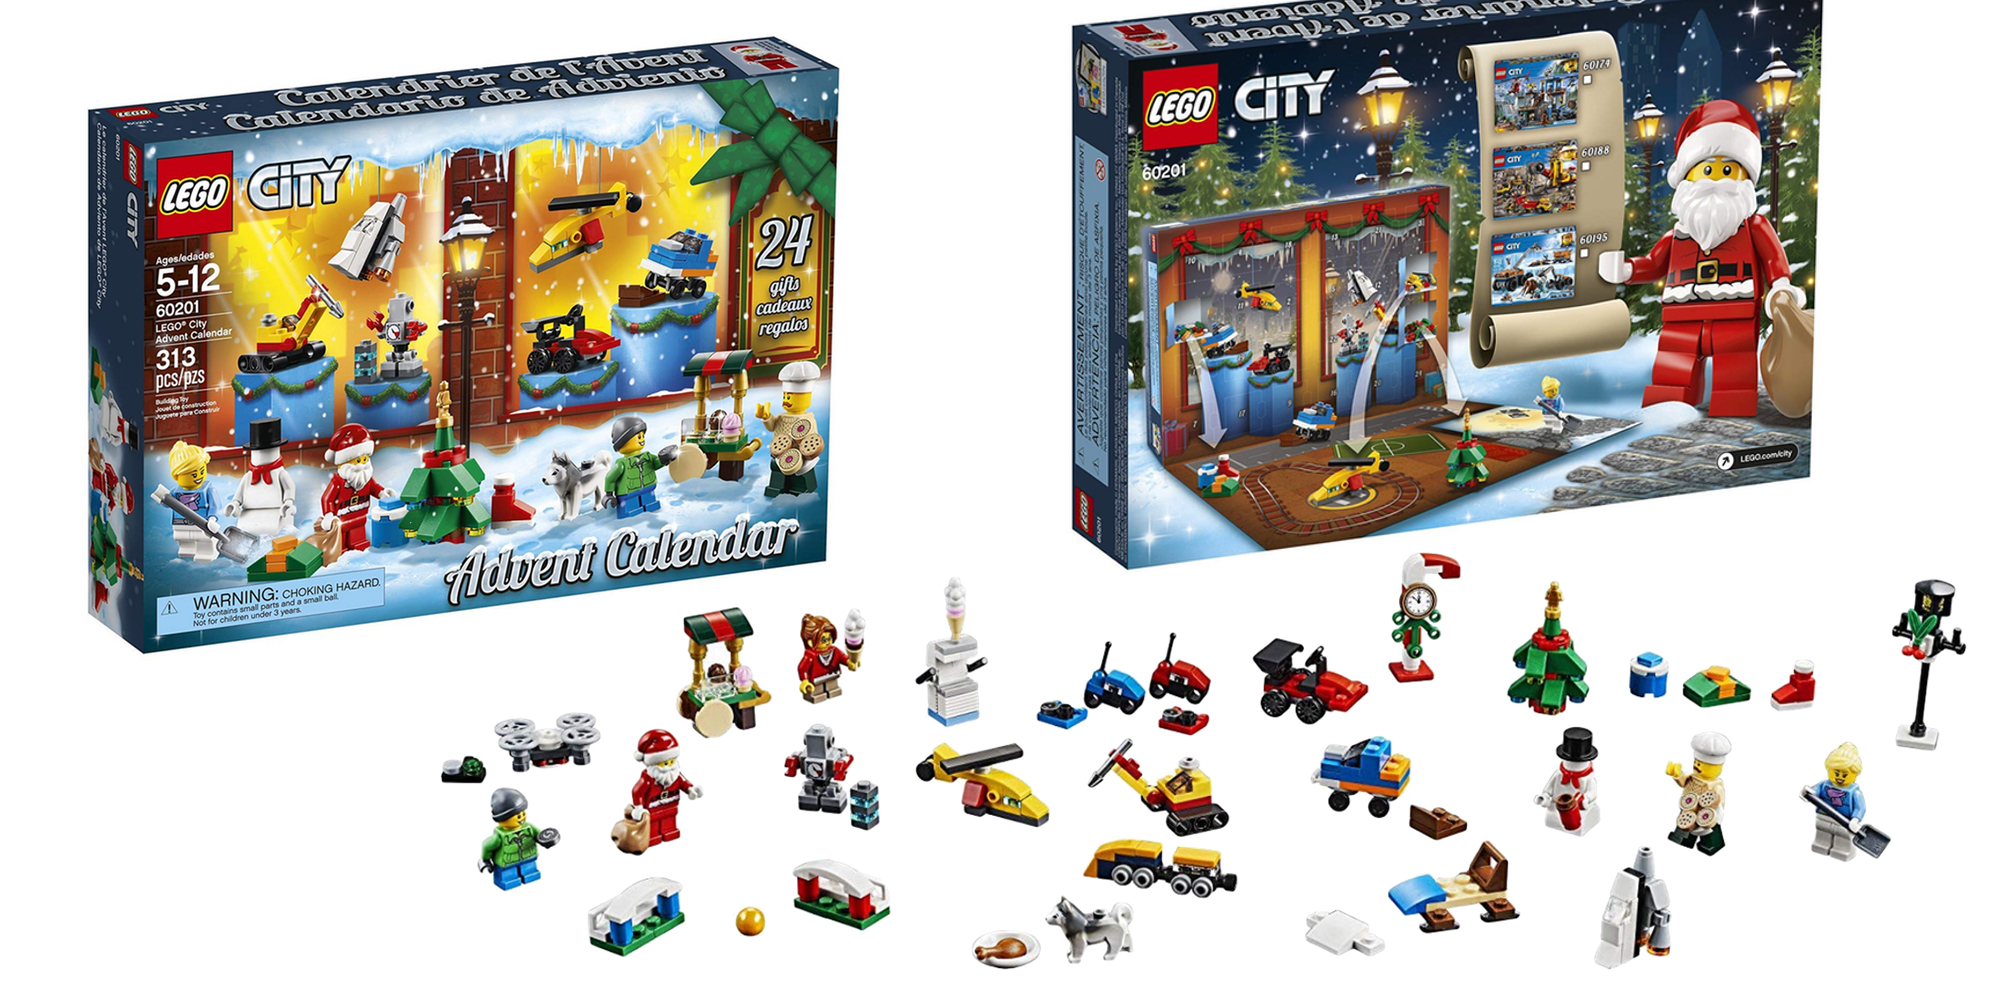 LEGO's City Advent Calendar packs 24 miniature builds at 22 (Reg. 30